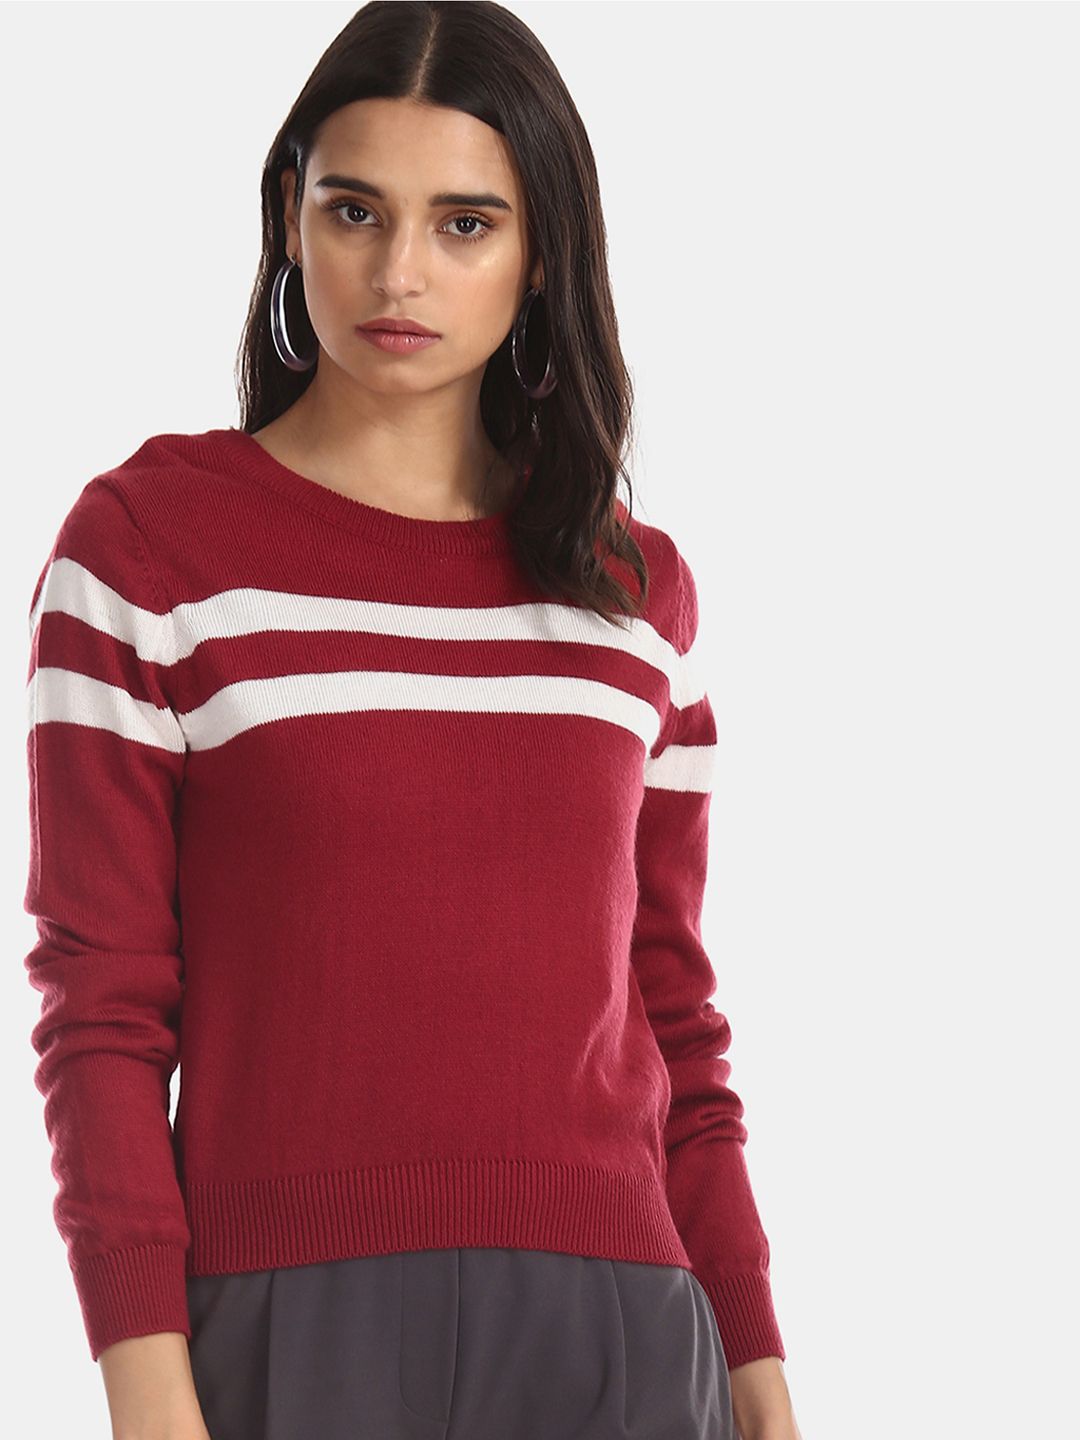 Aeropostale Women Maroon & White Striped Sweater Price in India